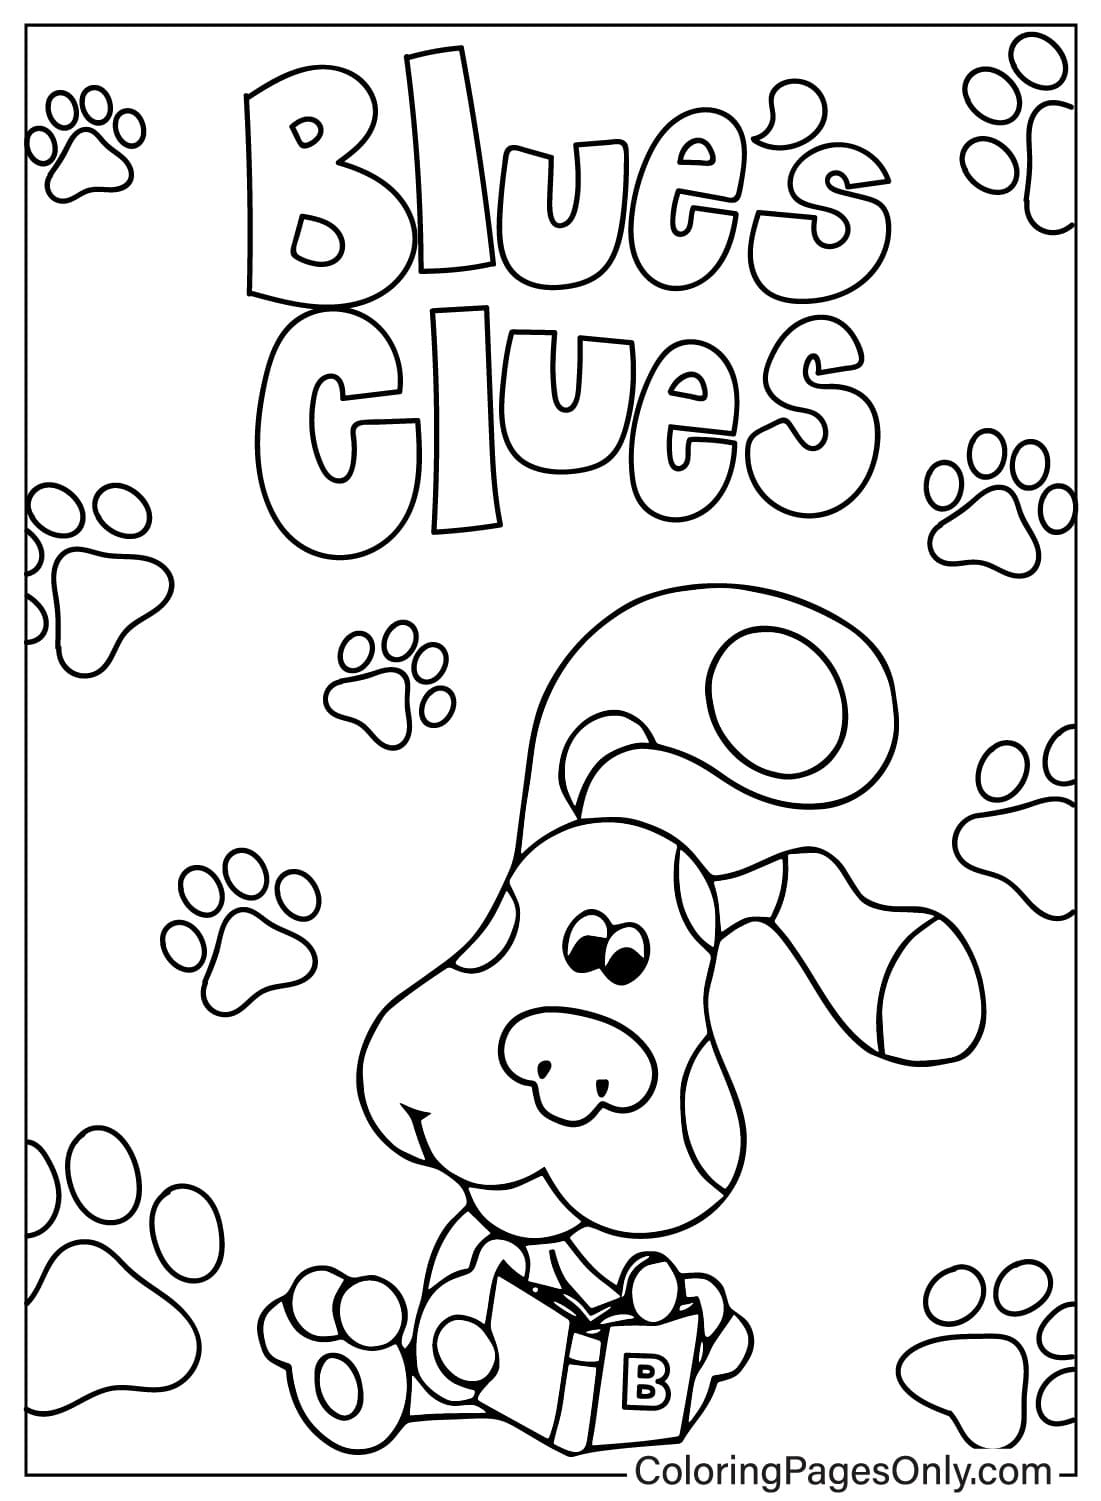 Imagens Blue's Clues Página para colorir de Blue's Clues